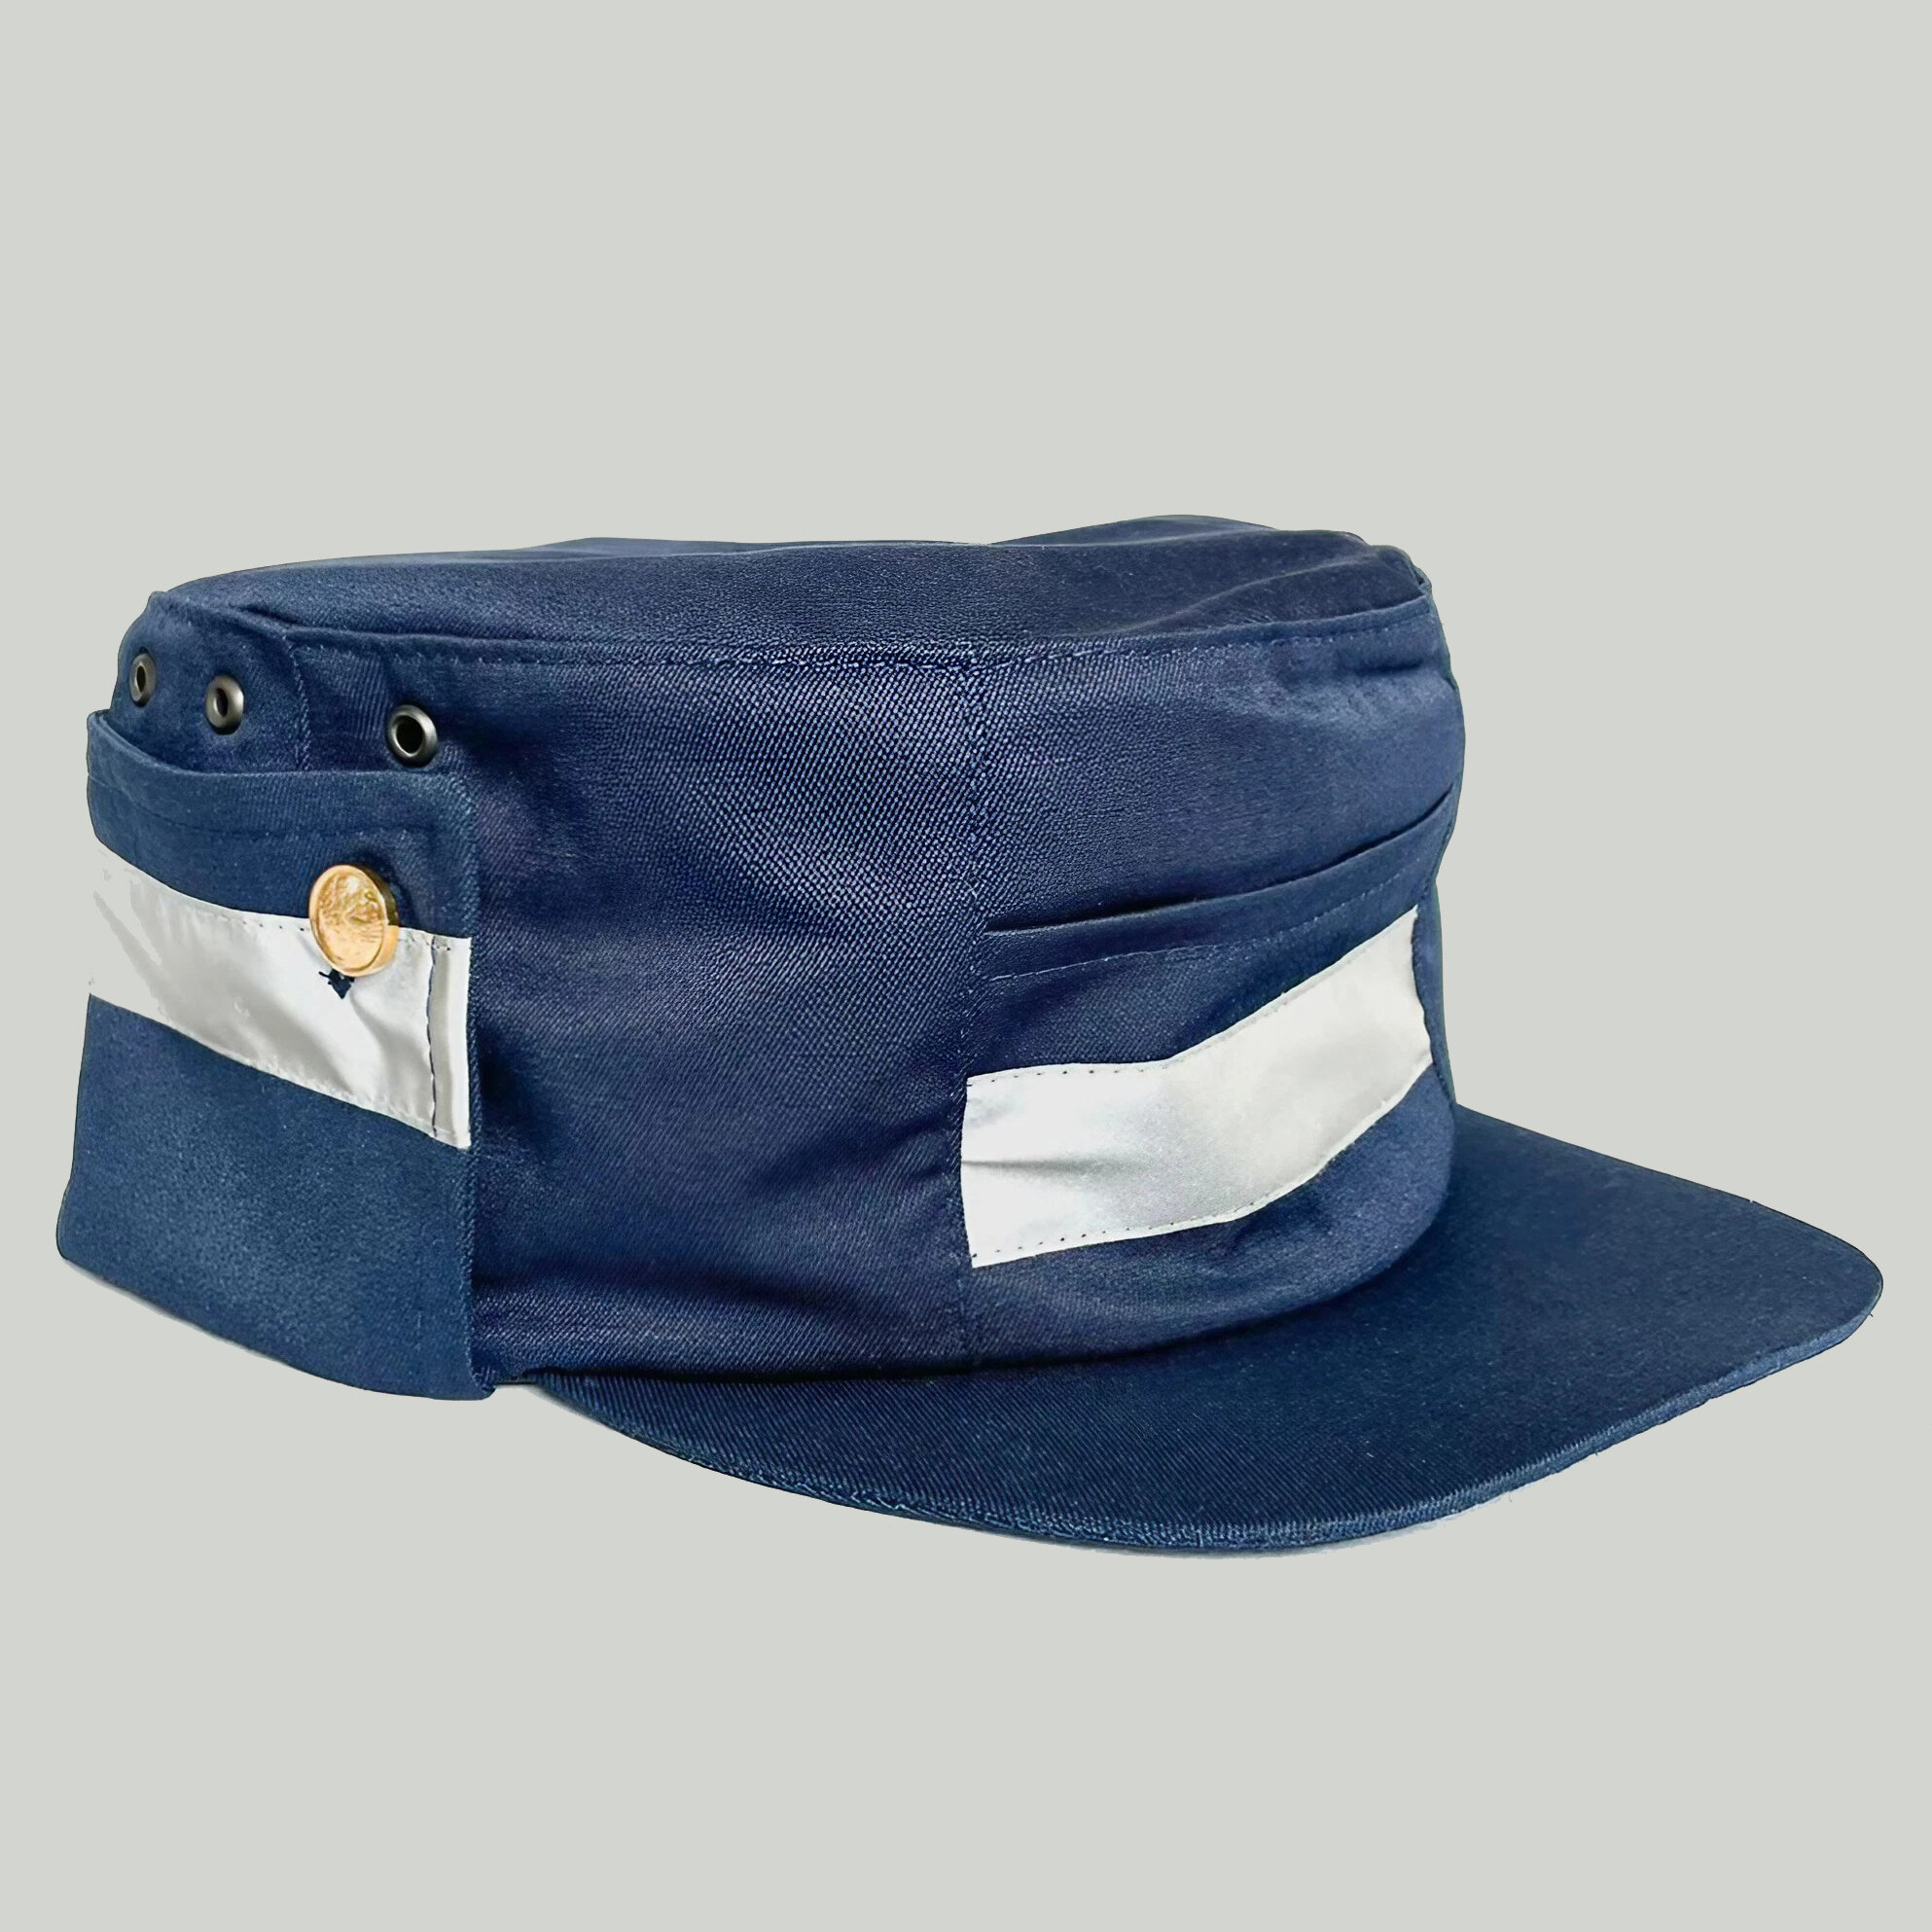 Форменная кепка сотрудника ДПС, 59 размер, синий цвет